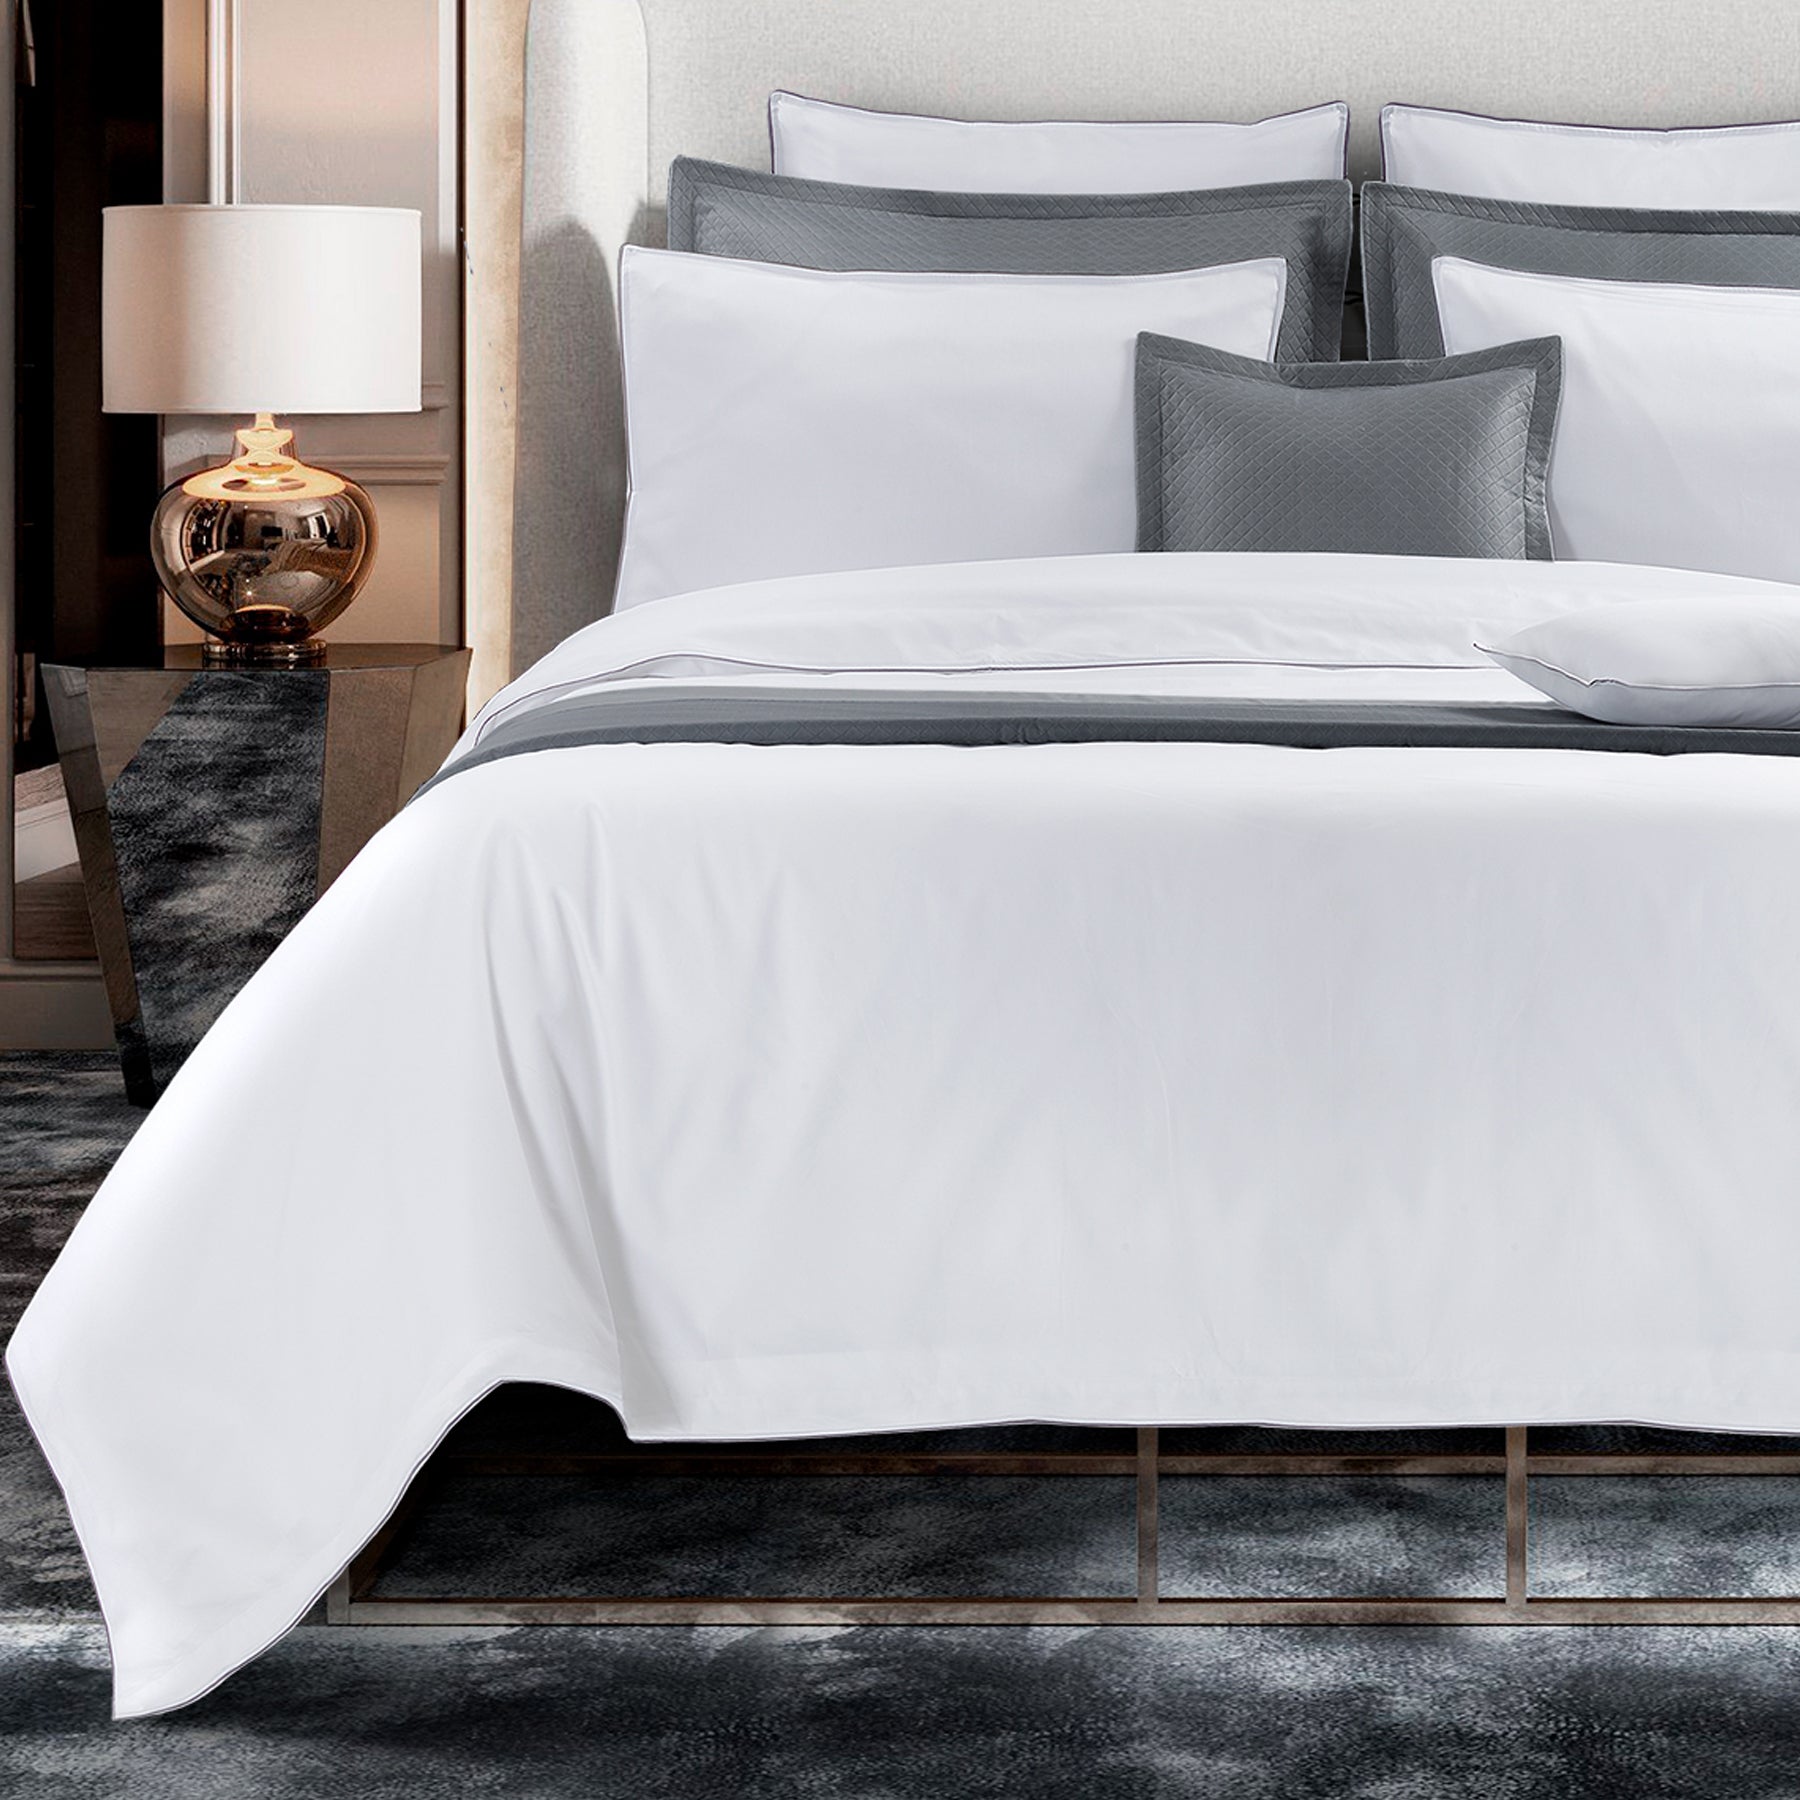 Portofino luxury bedding percalle cotton by Emilia Burano Italy